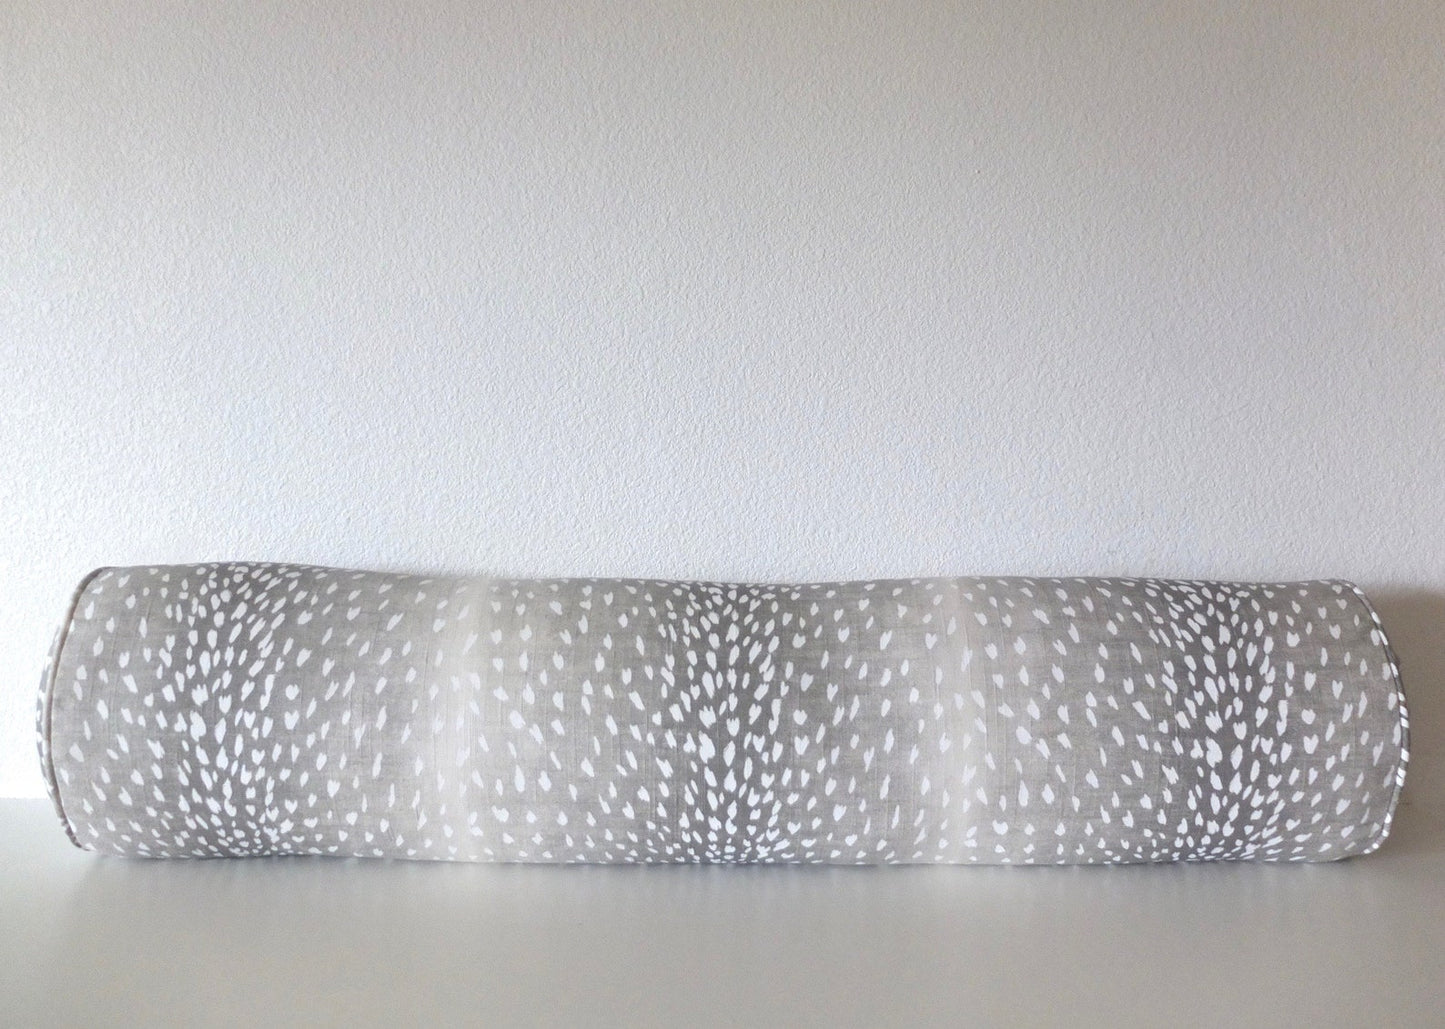 Ballard Designs Antelope Pillow Cover in Grey - Available in Bolster, Lumbar, Throw, Euro Sham Sizes